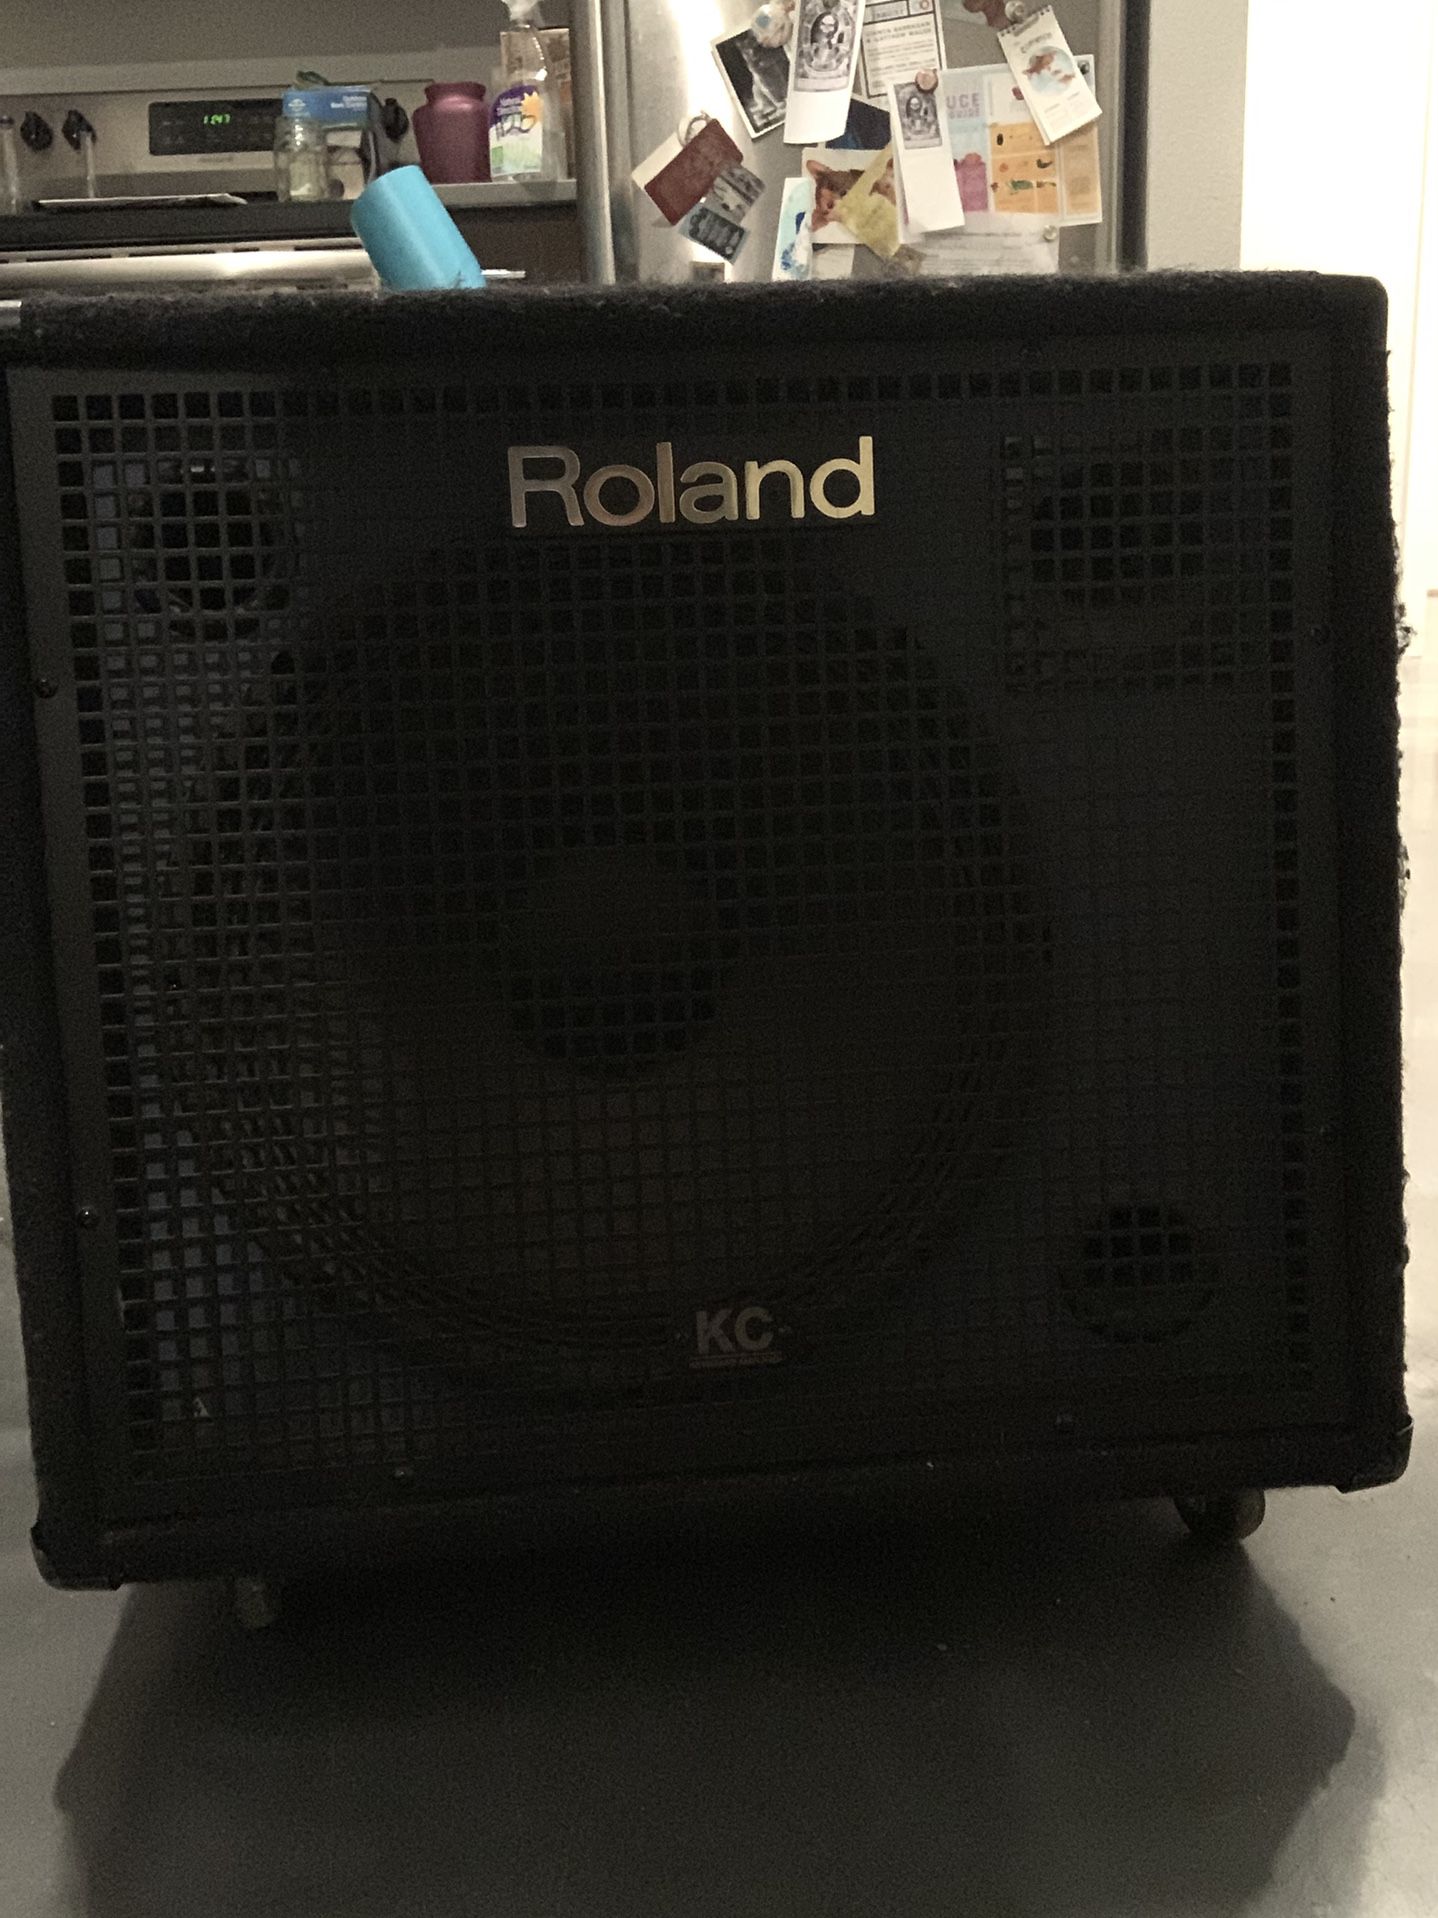 Roland KC550 keyboard amp